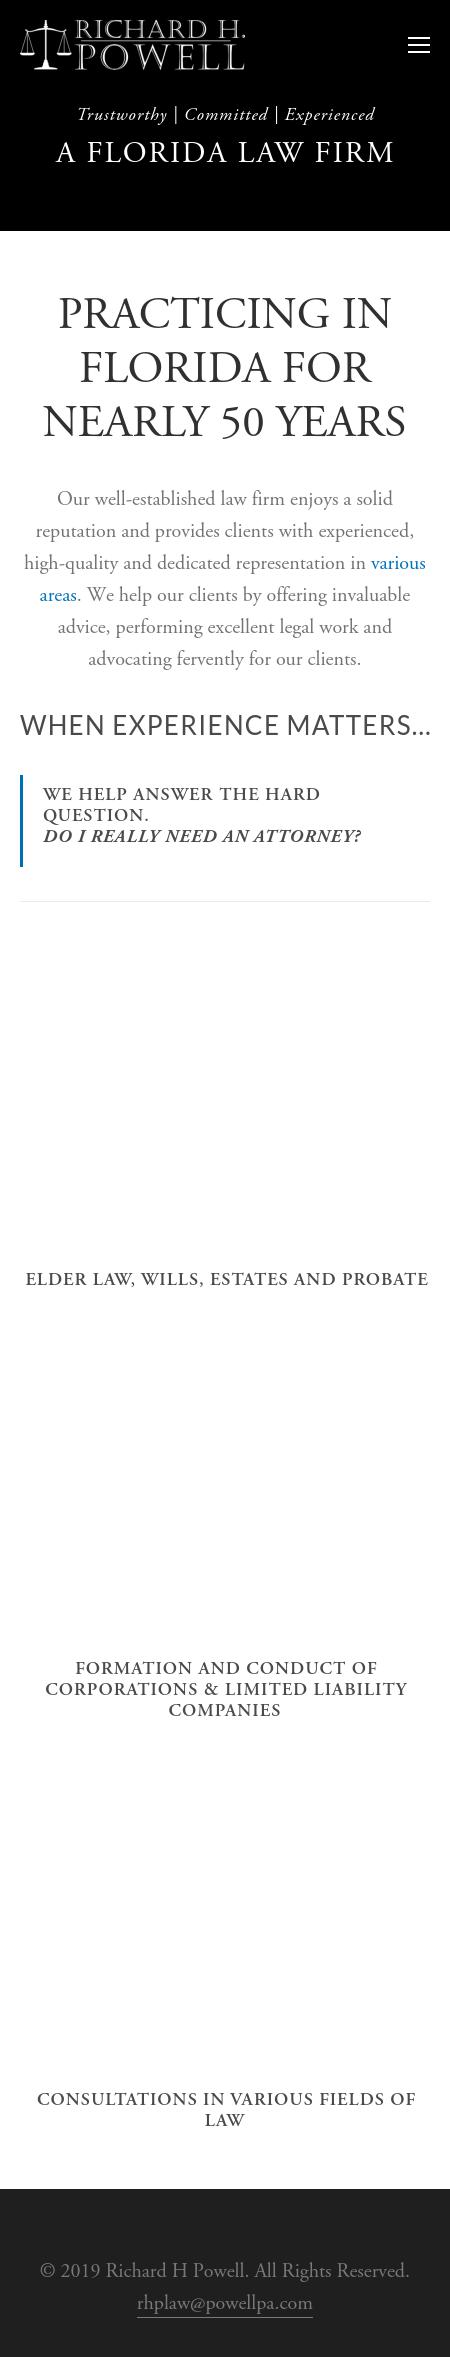 Richard H. Powell & Associates, P.A. - Fort Walton Beach FL Lawyers